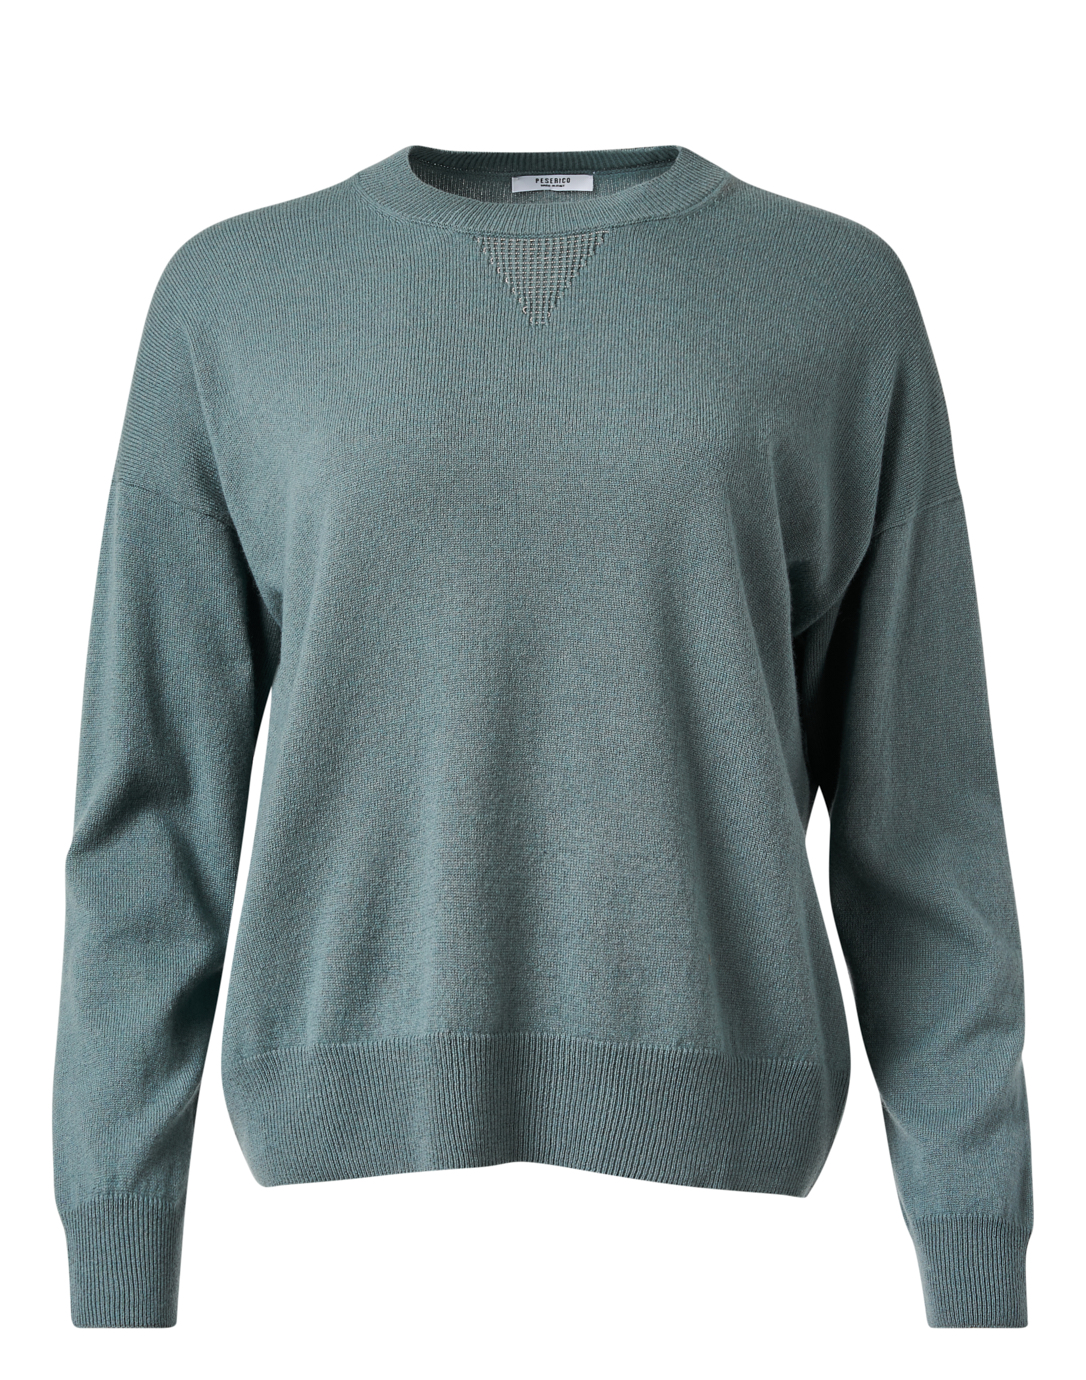 Silk Cashmere Sweater Top